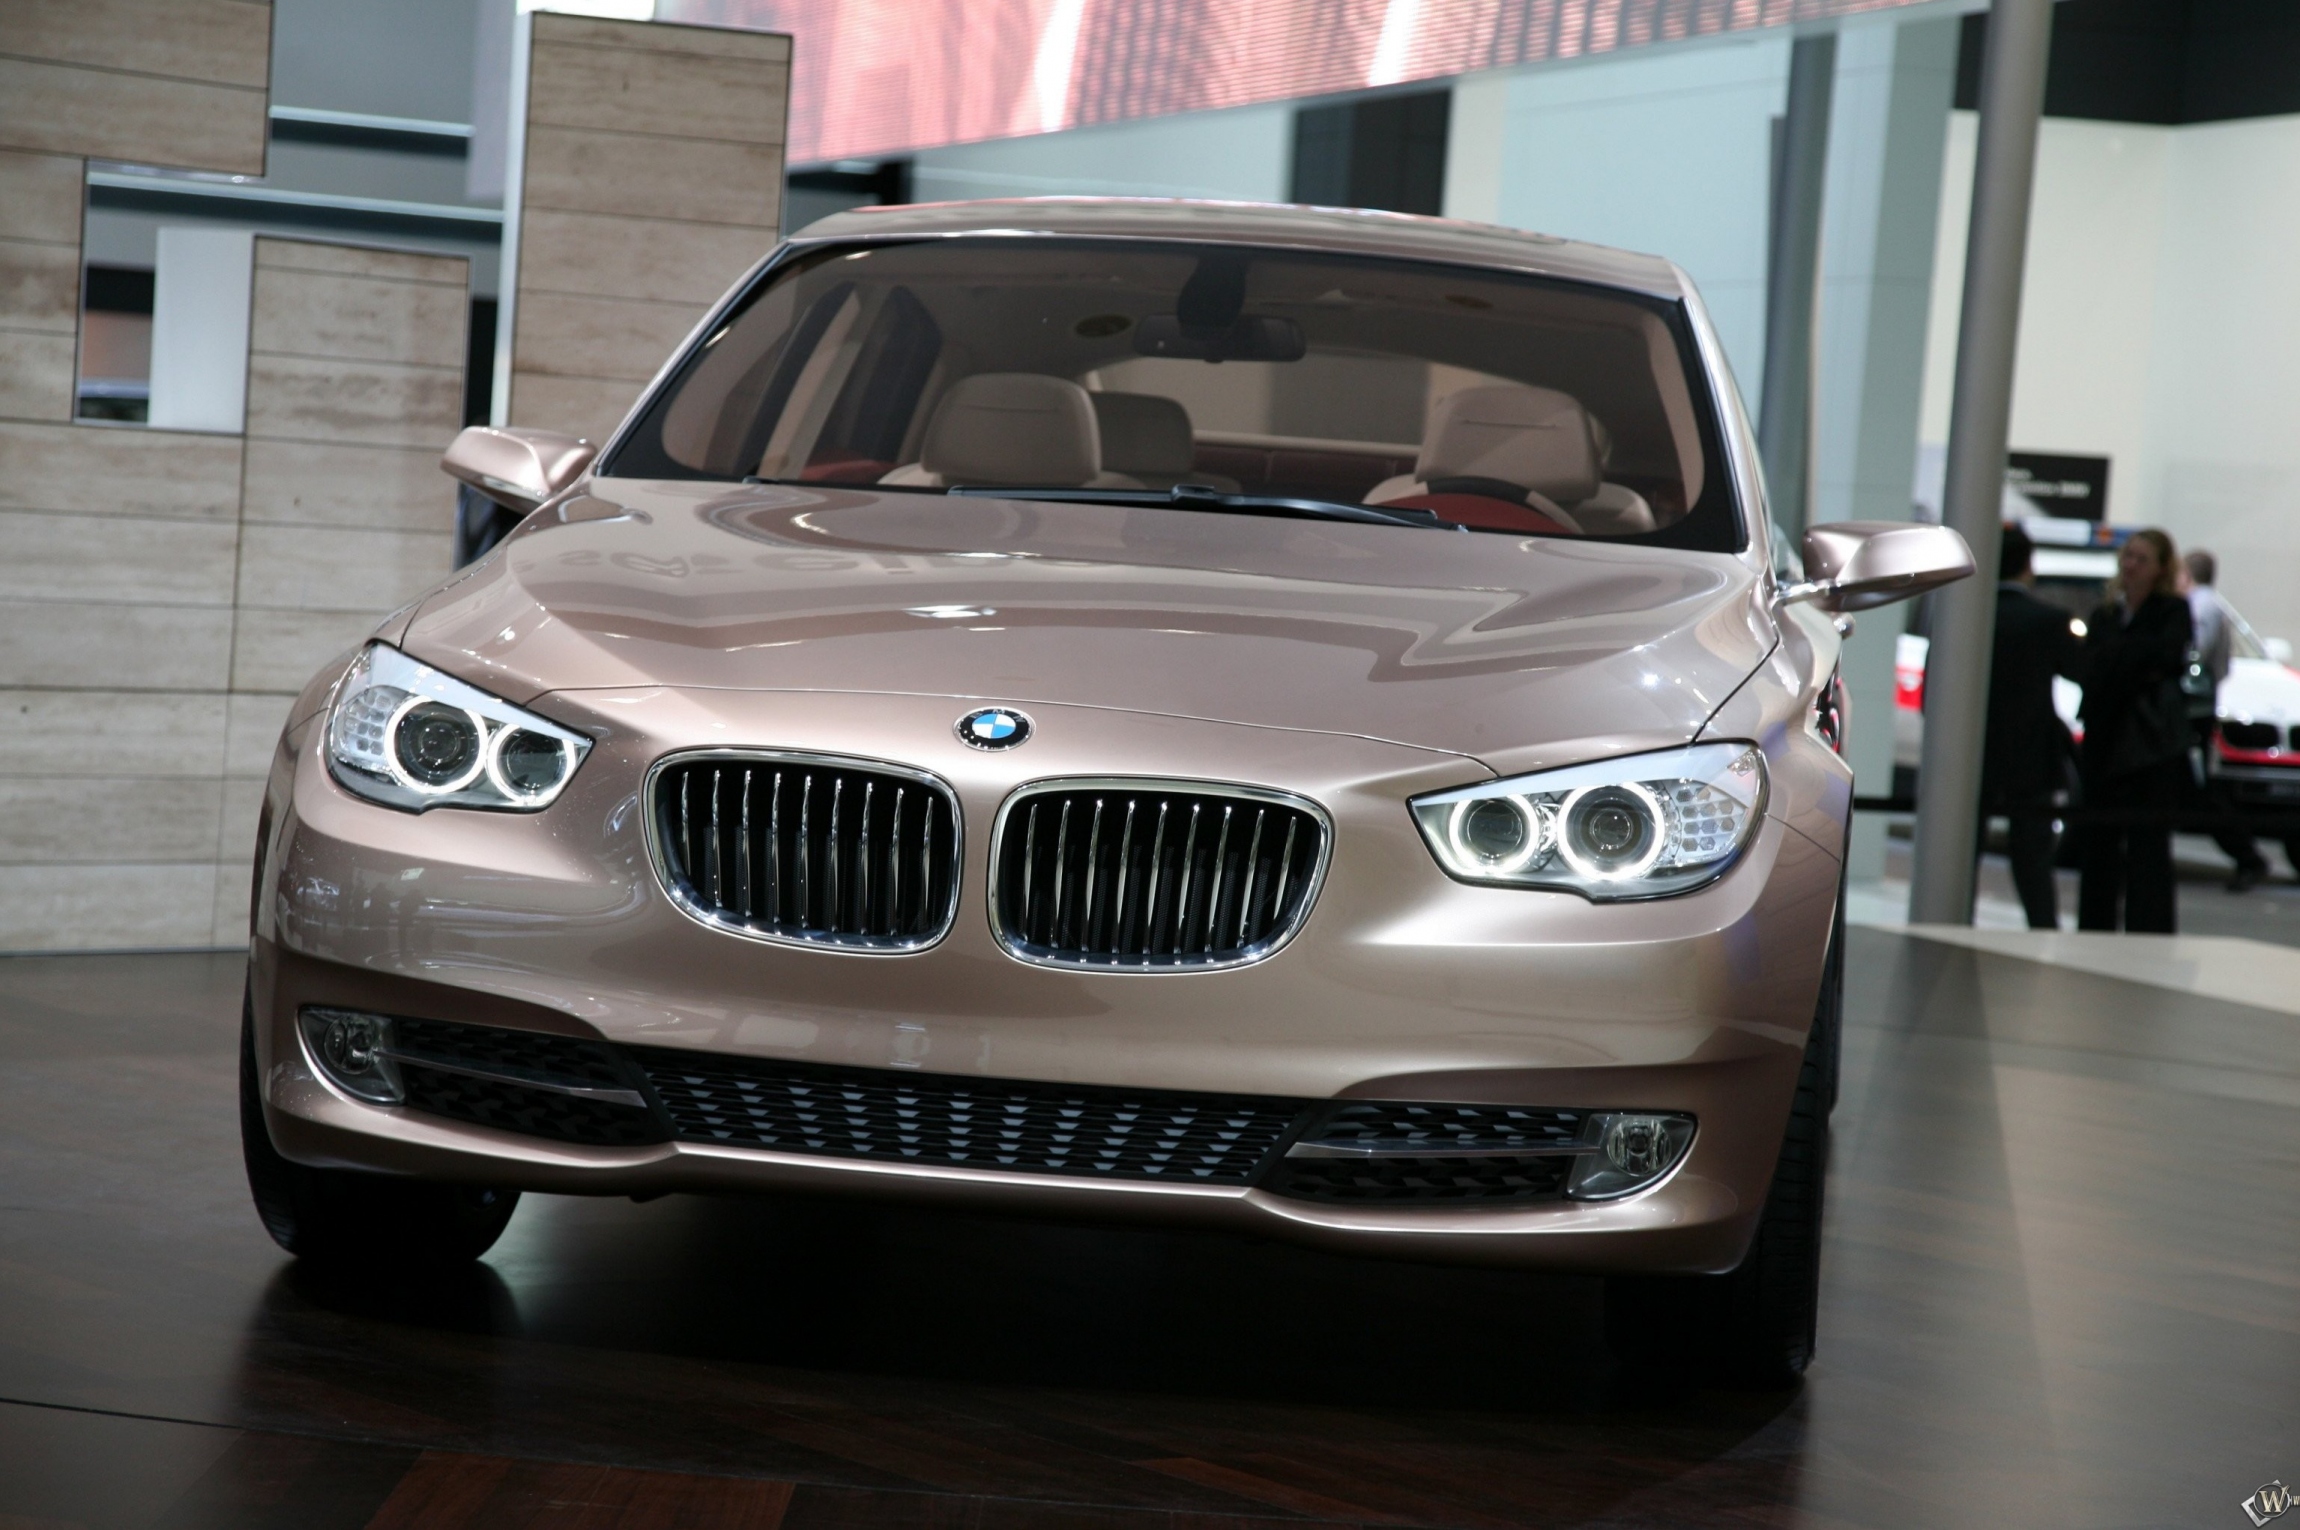 BMW - Concept 5 Series Gran Turismo (2009) 2300x1530